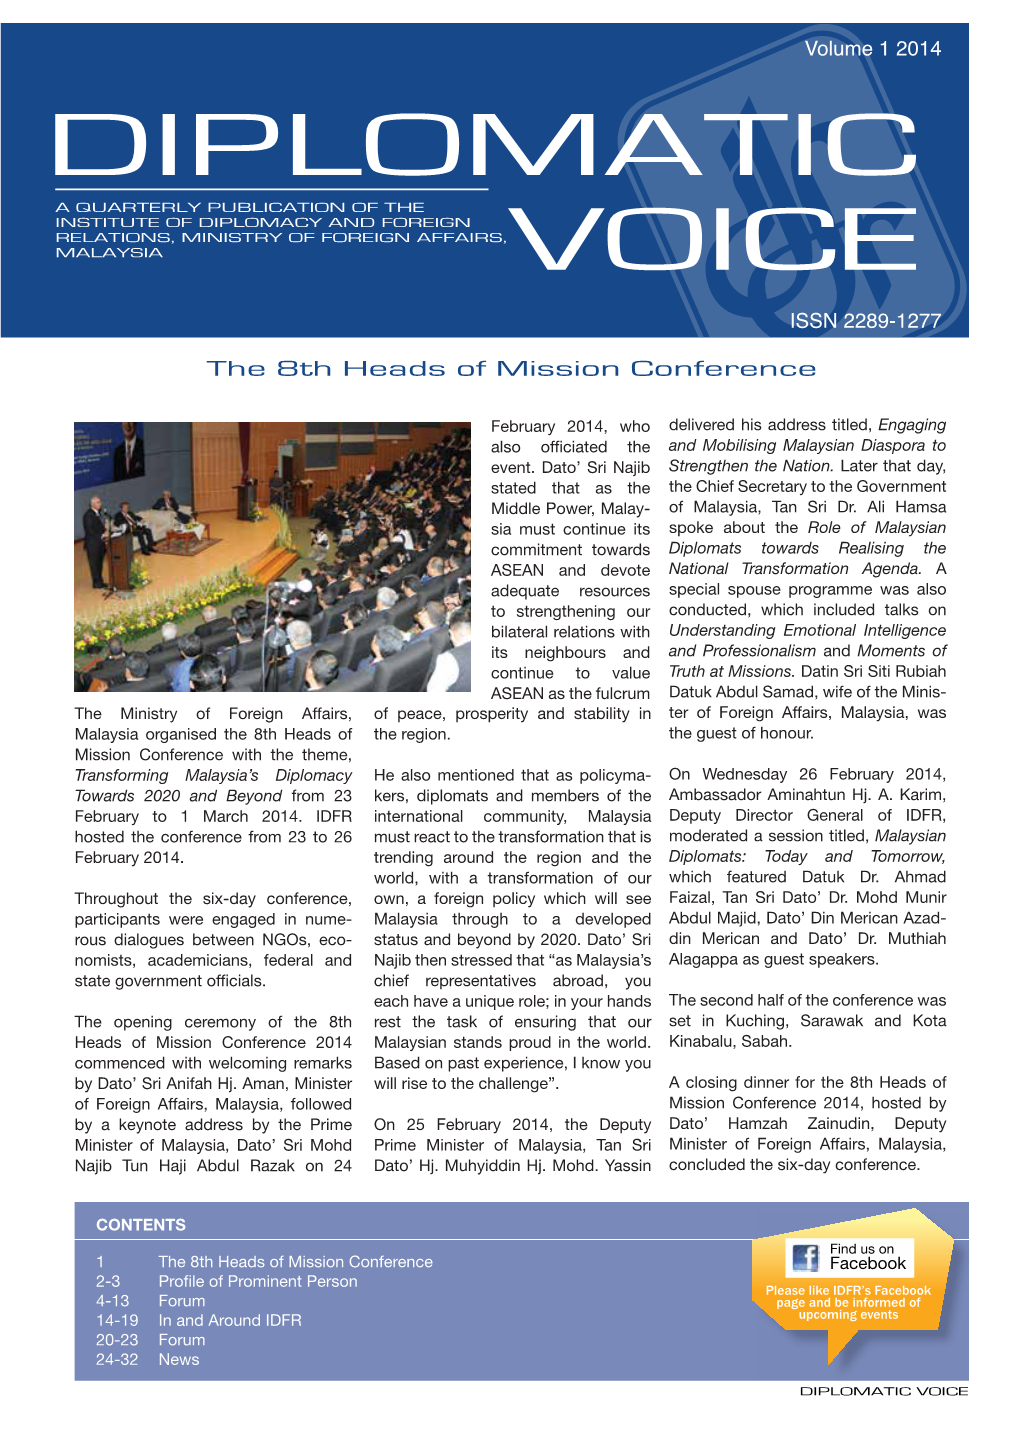 Diplomatic Voice Vol.1